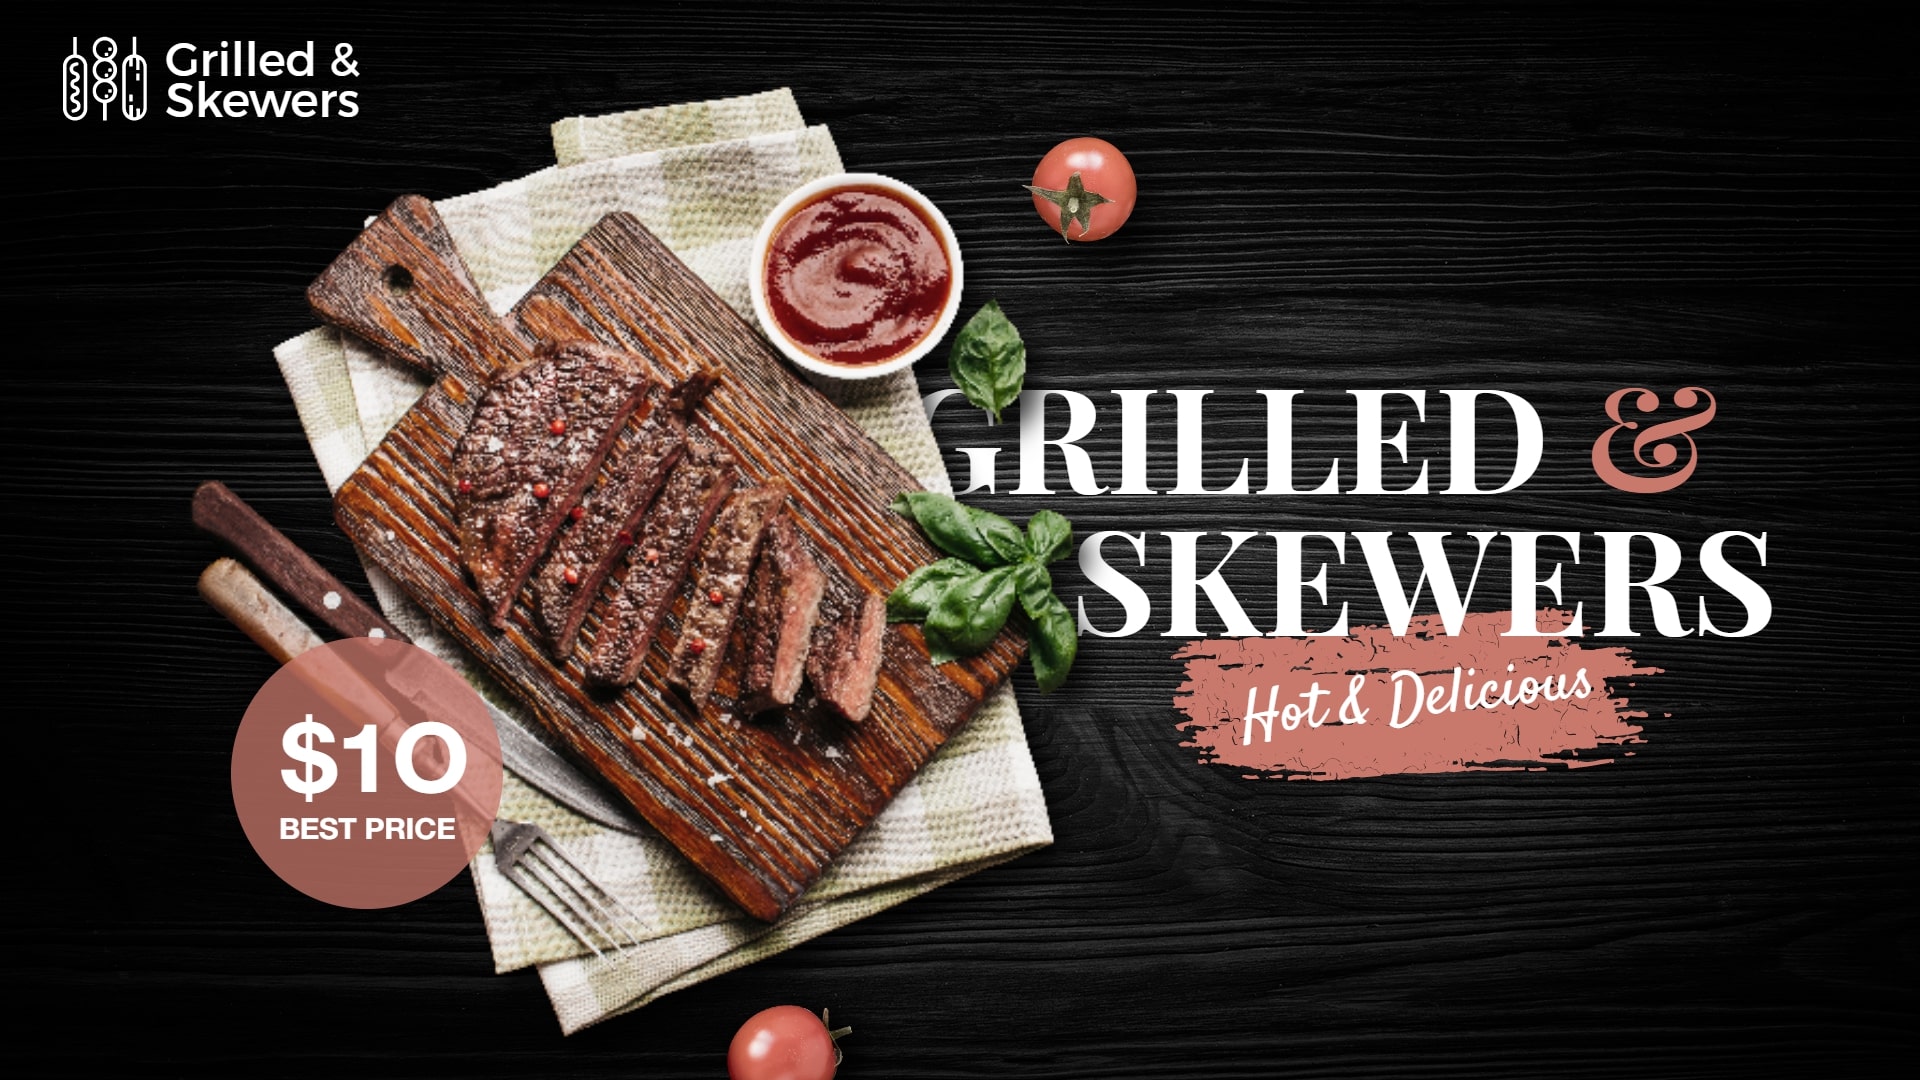 grilled skewers menu design idea